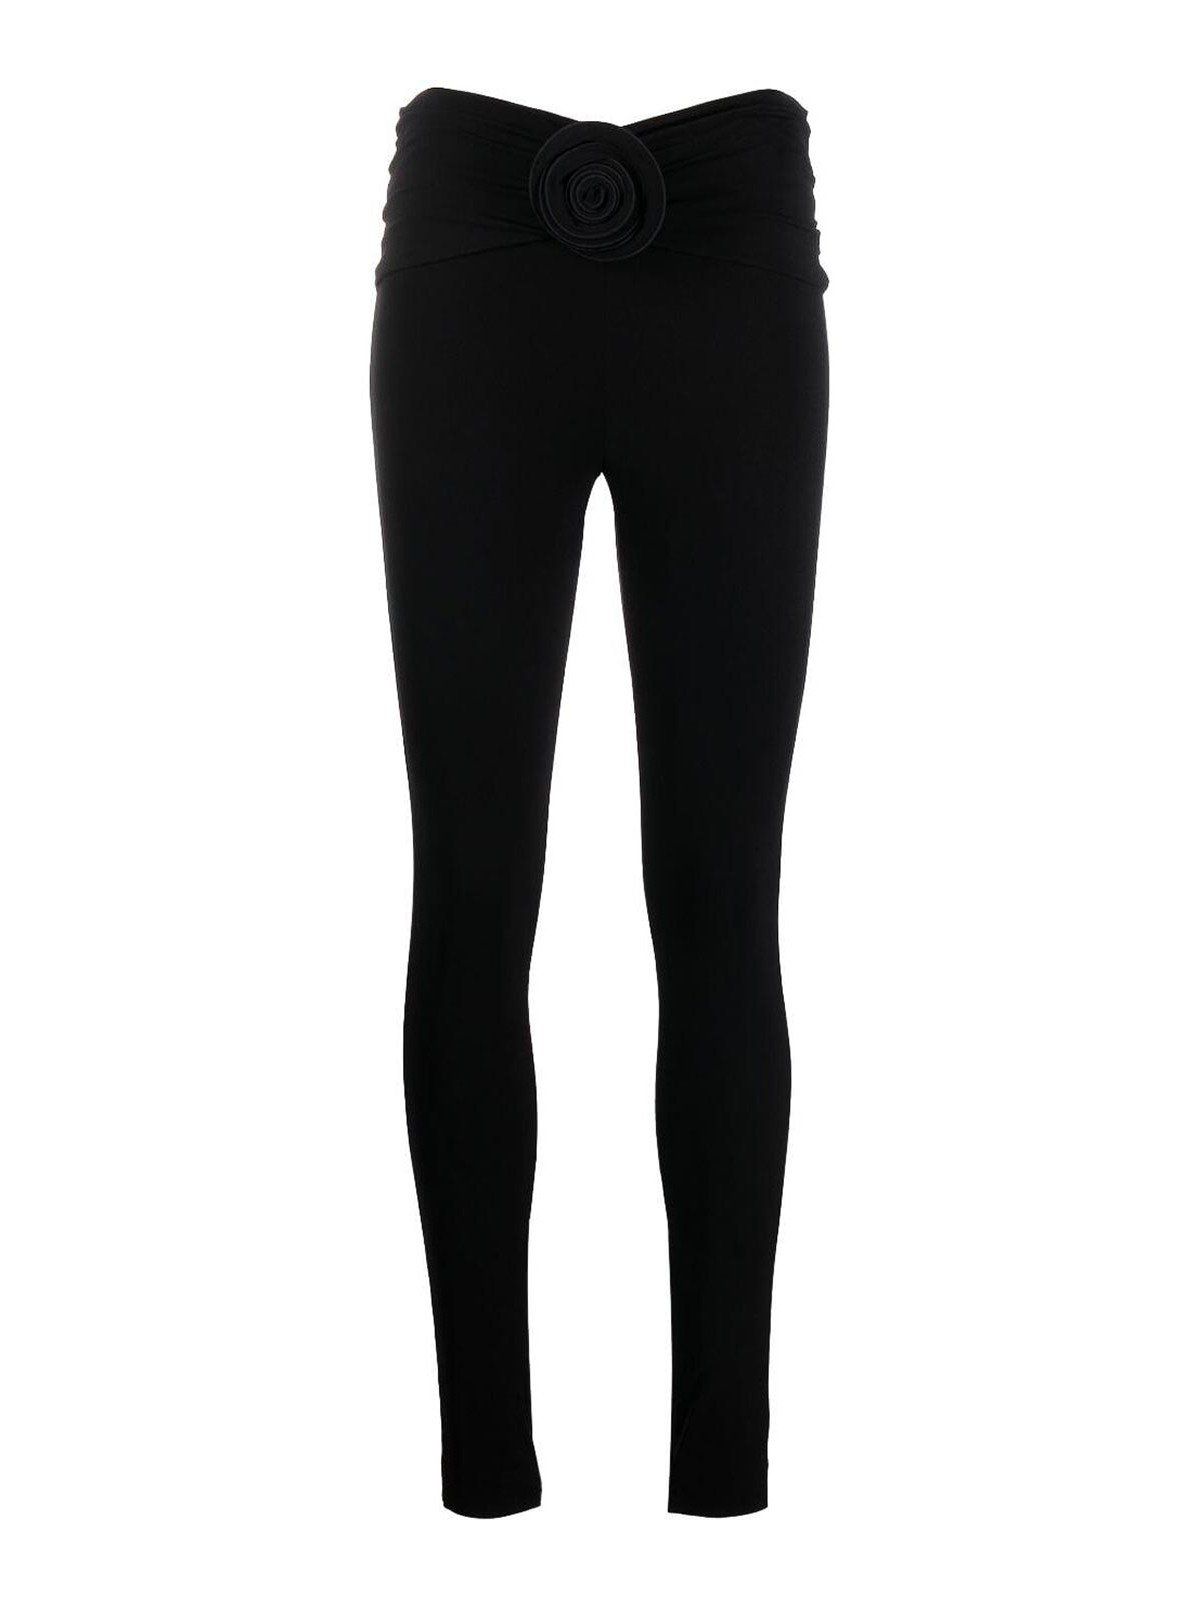 OG Jogging Pants - Black Embellished leggings Alexander Wang -  GenesinlifeShops Pakistan